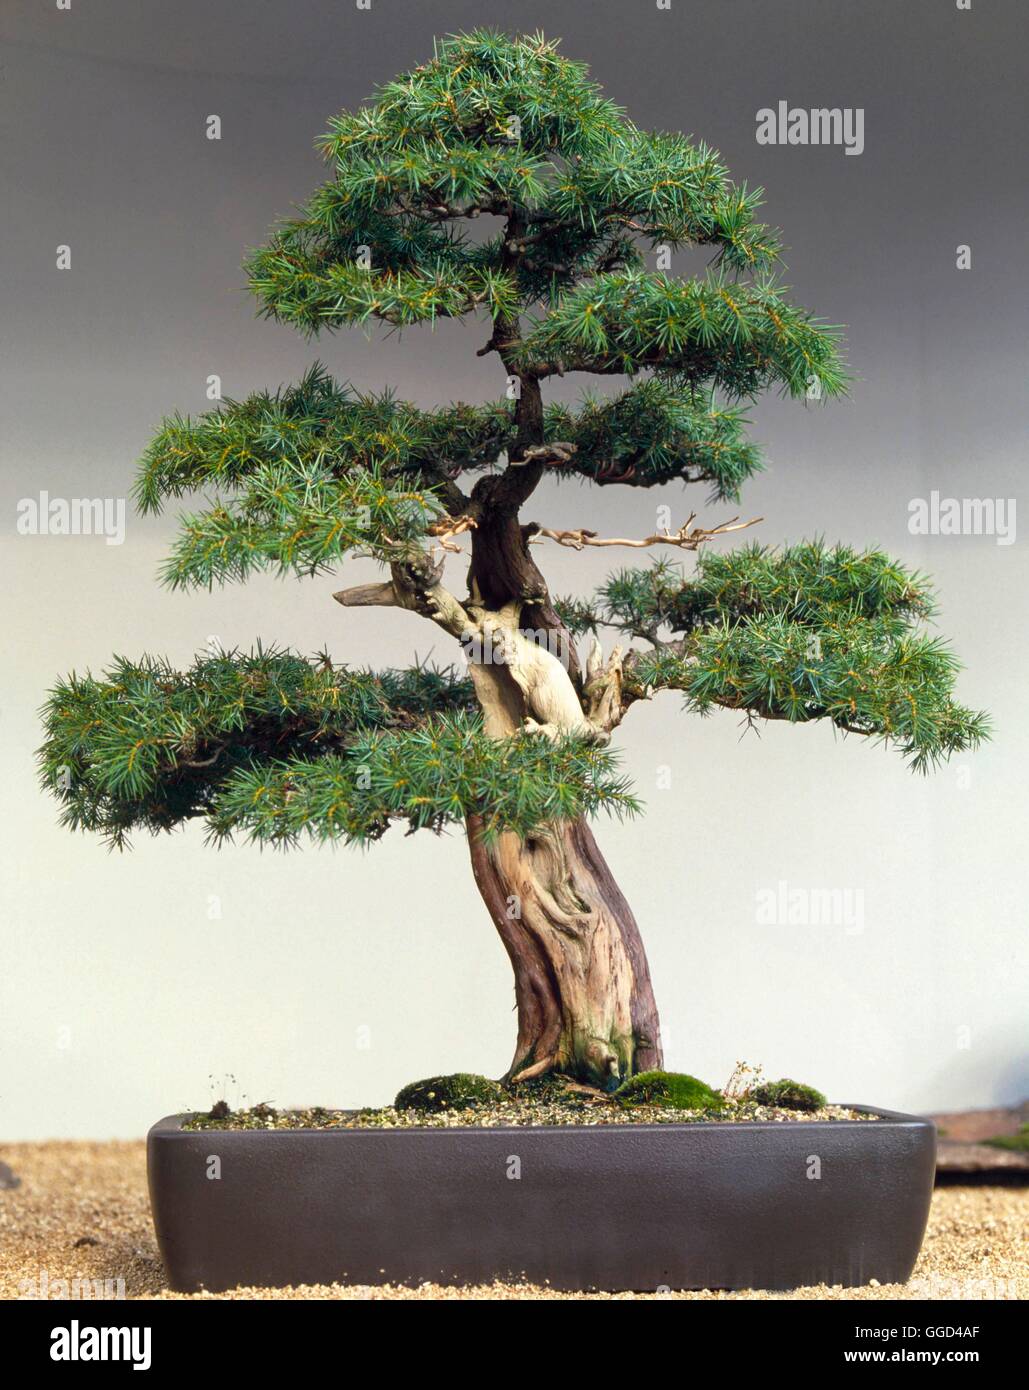 Bonsai - Juniperus rigida - (Over 100 years old)   BON026872 Stock Photo